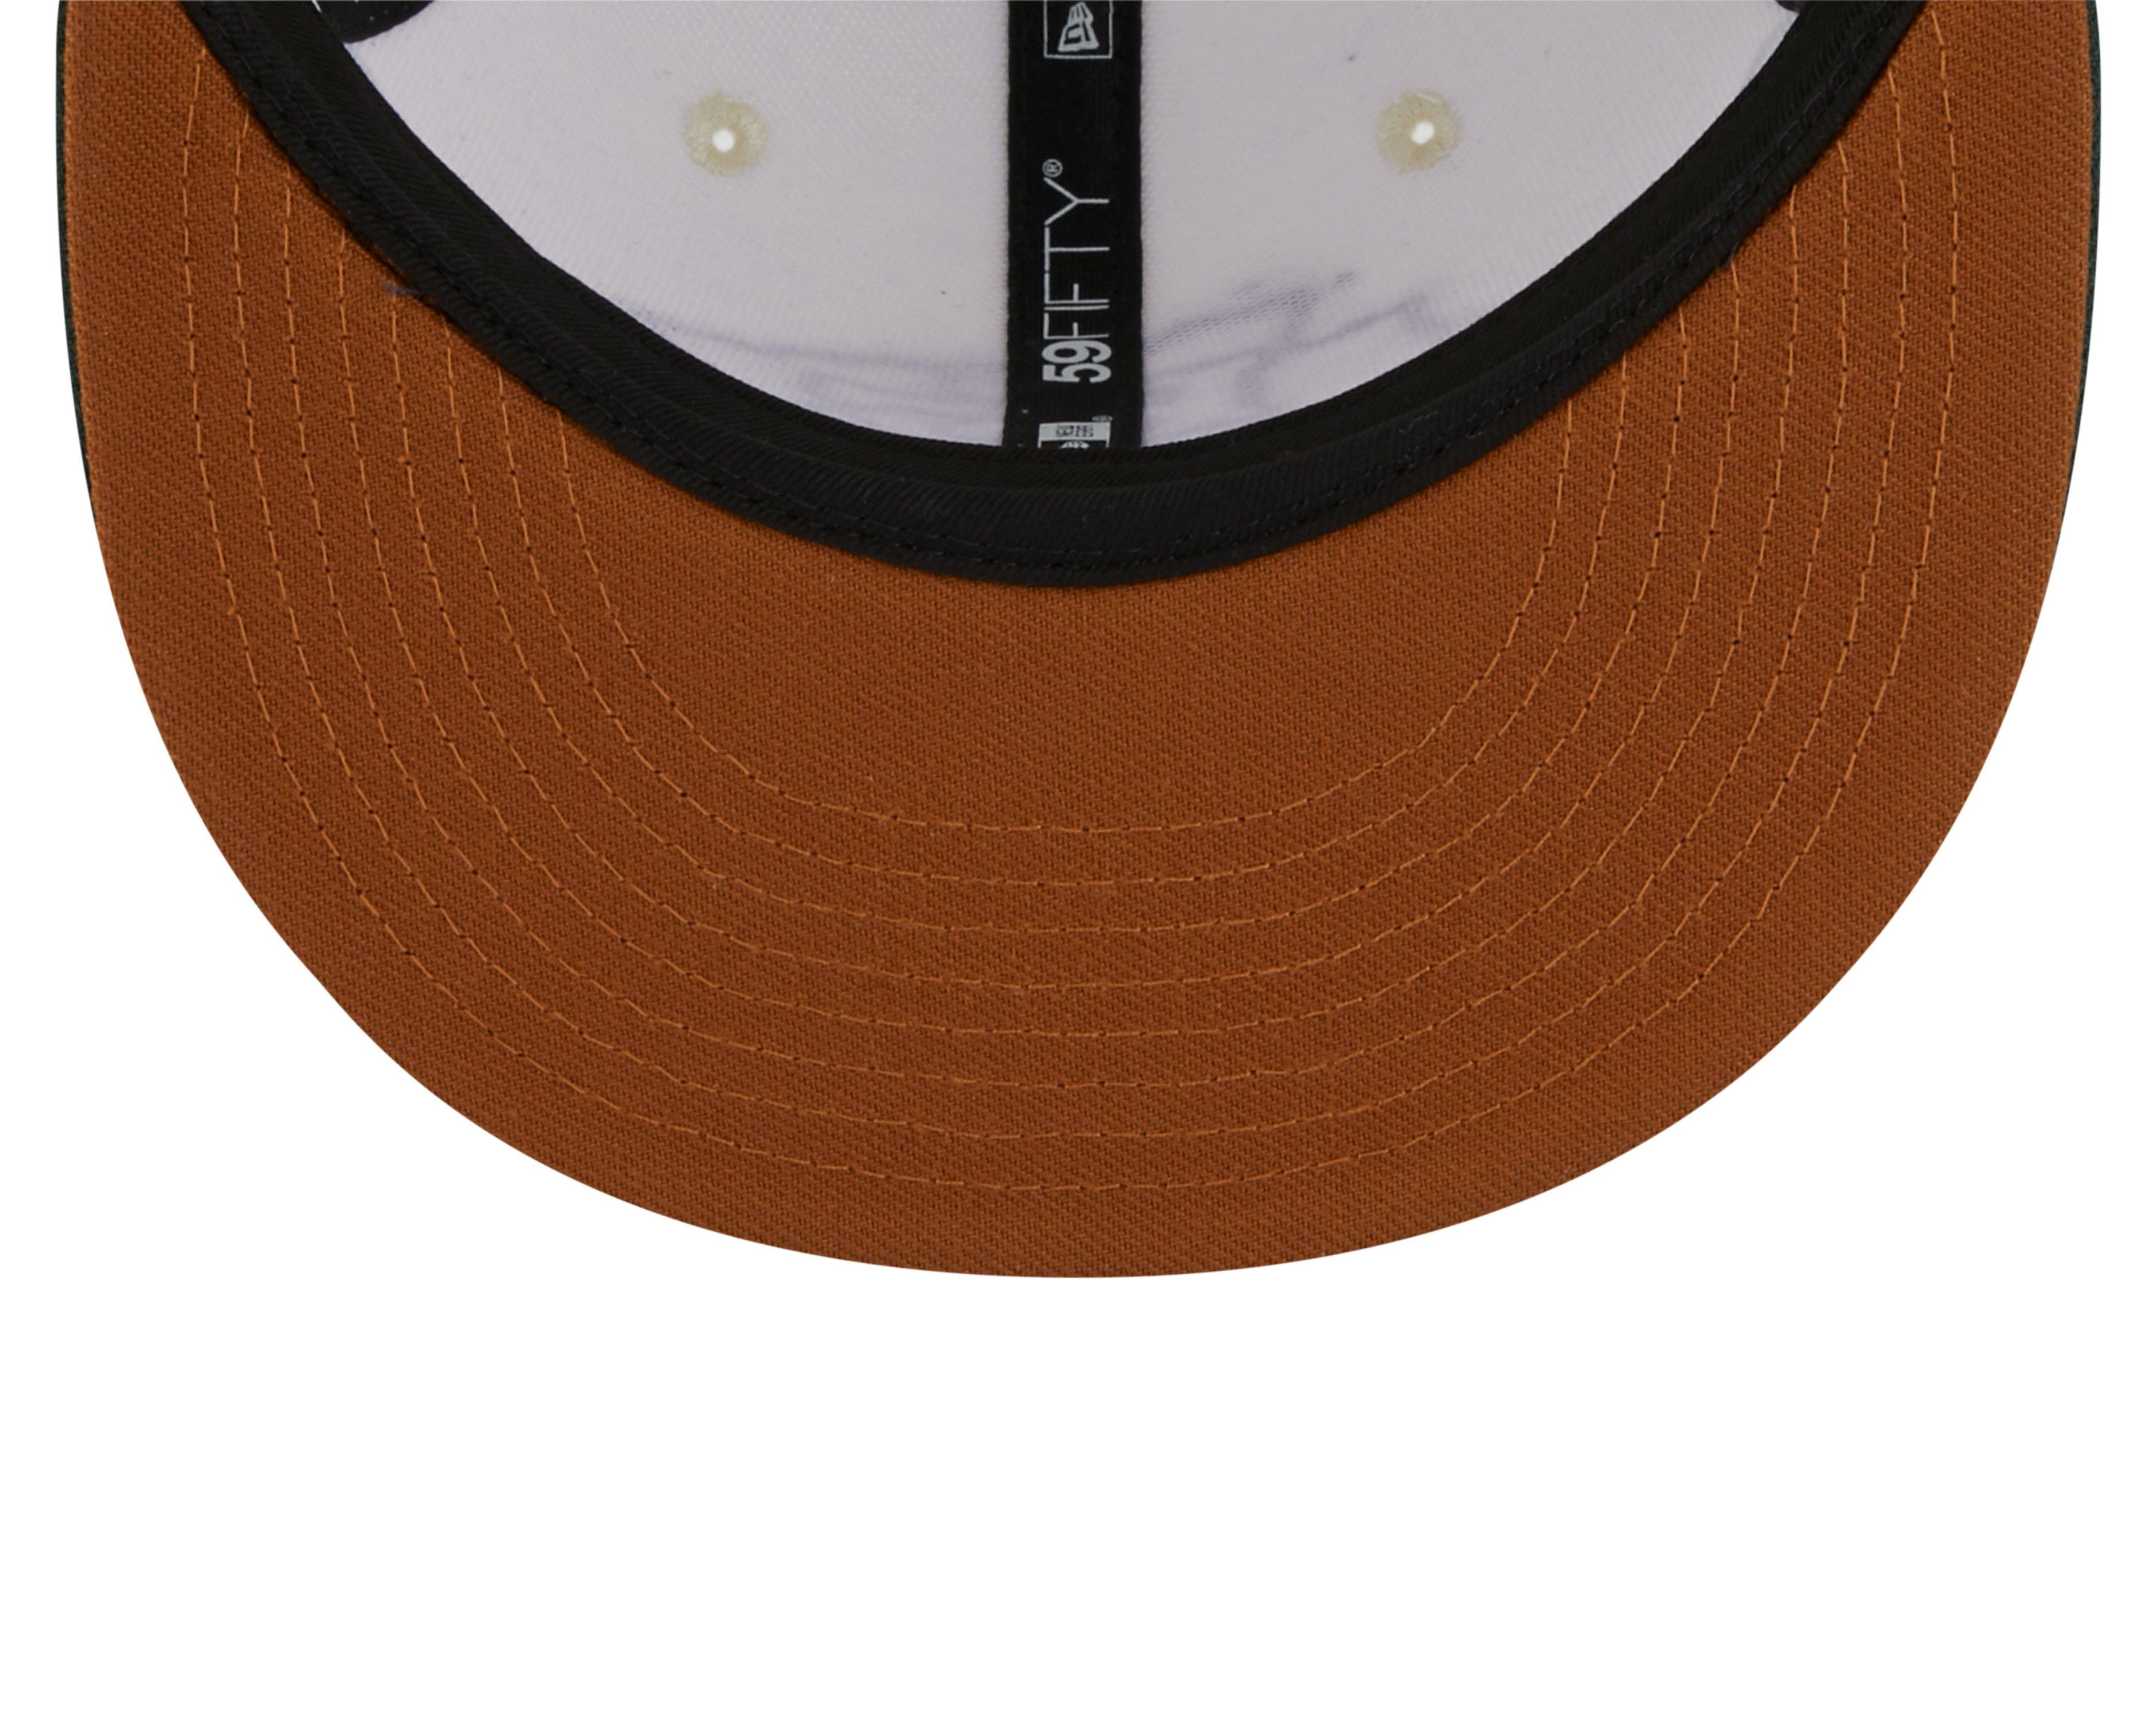 New Era Kansas City Chiefs Super Bowl IV Black Summerpop Edition 59Fifty  Fitted Hat